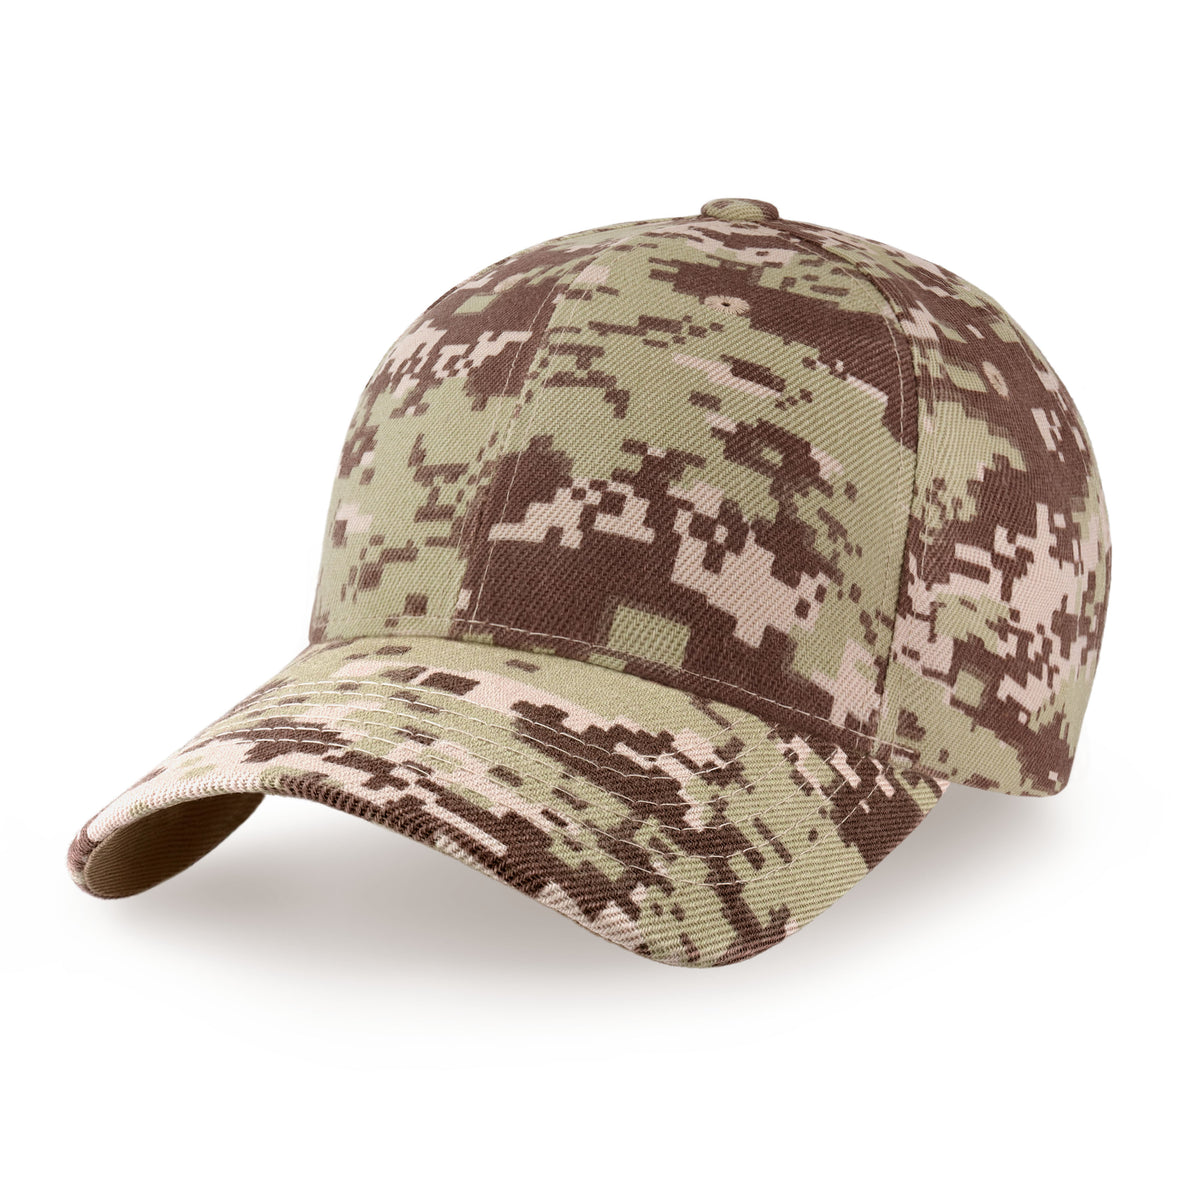 Structured Ball Cap